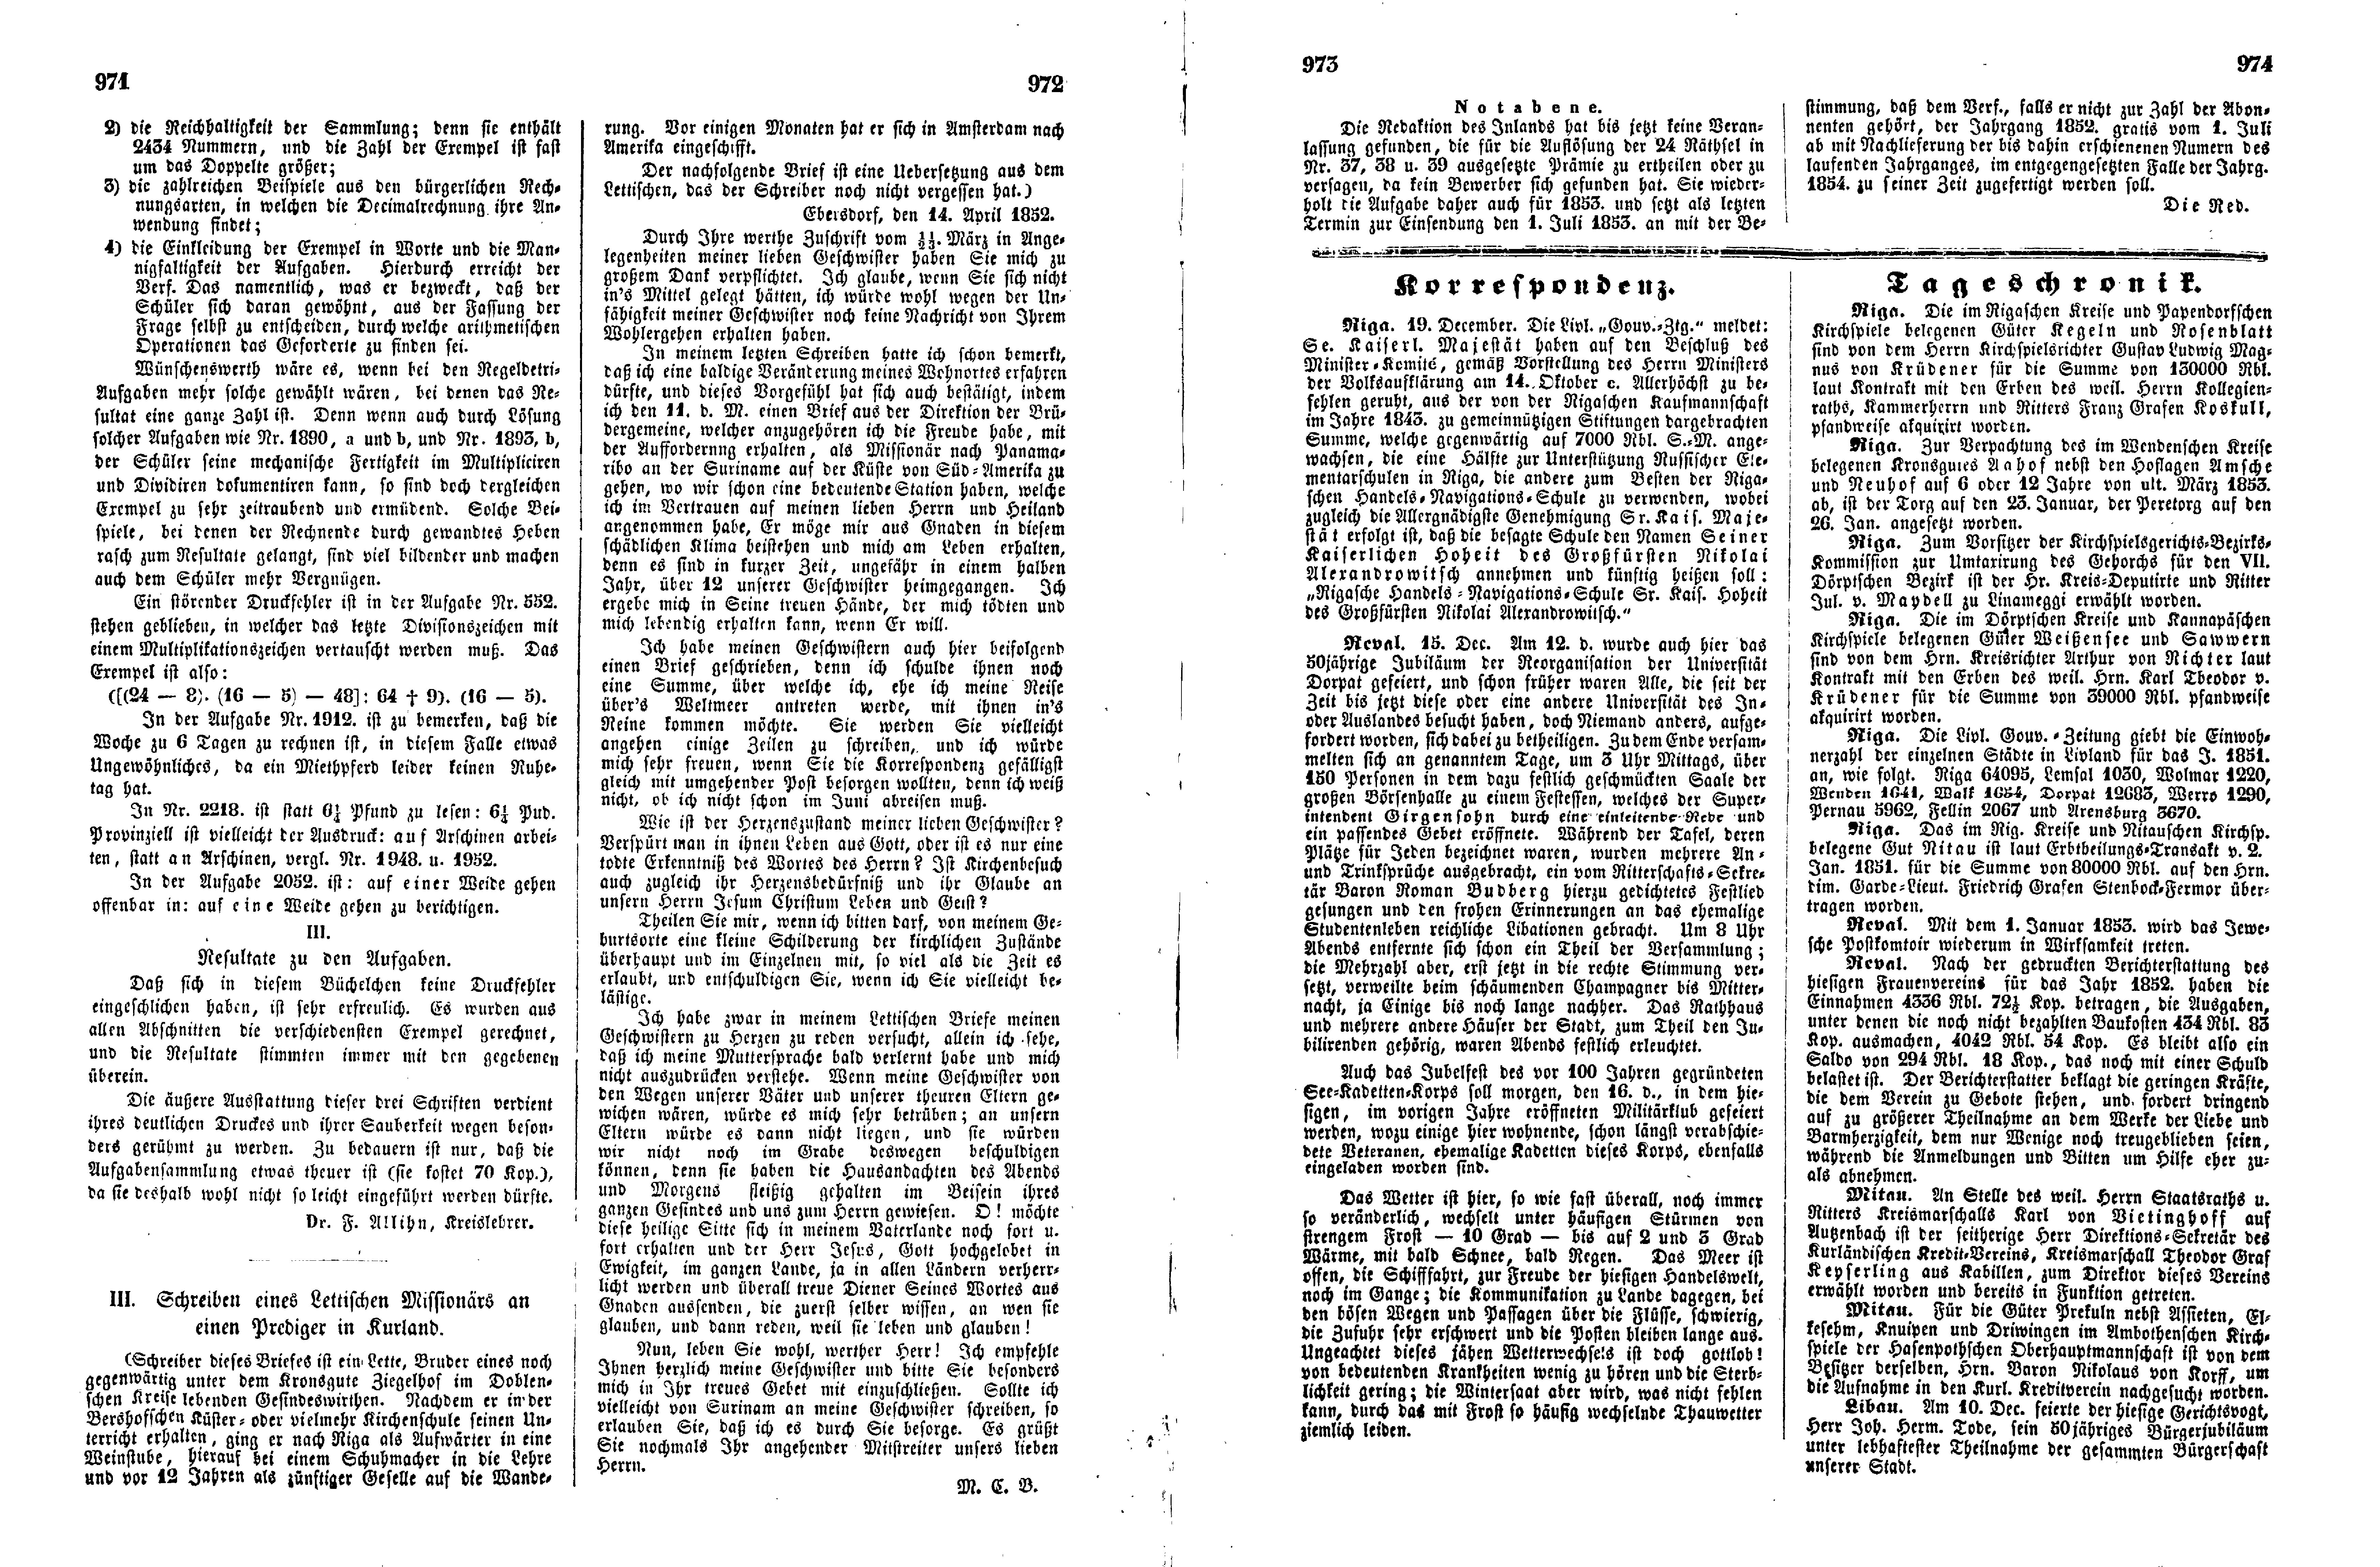 Das Inland [17] (1852) | 248. (971-974) Main body of text